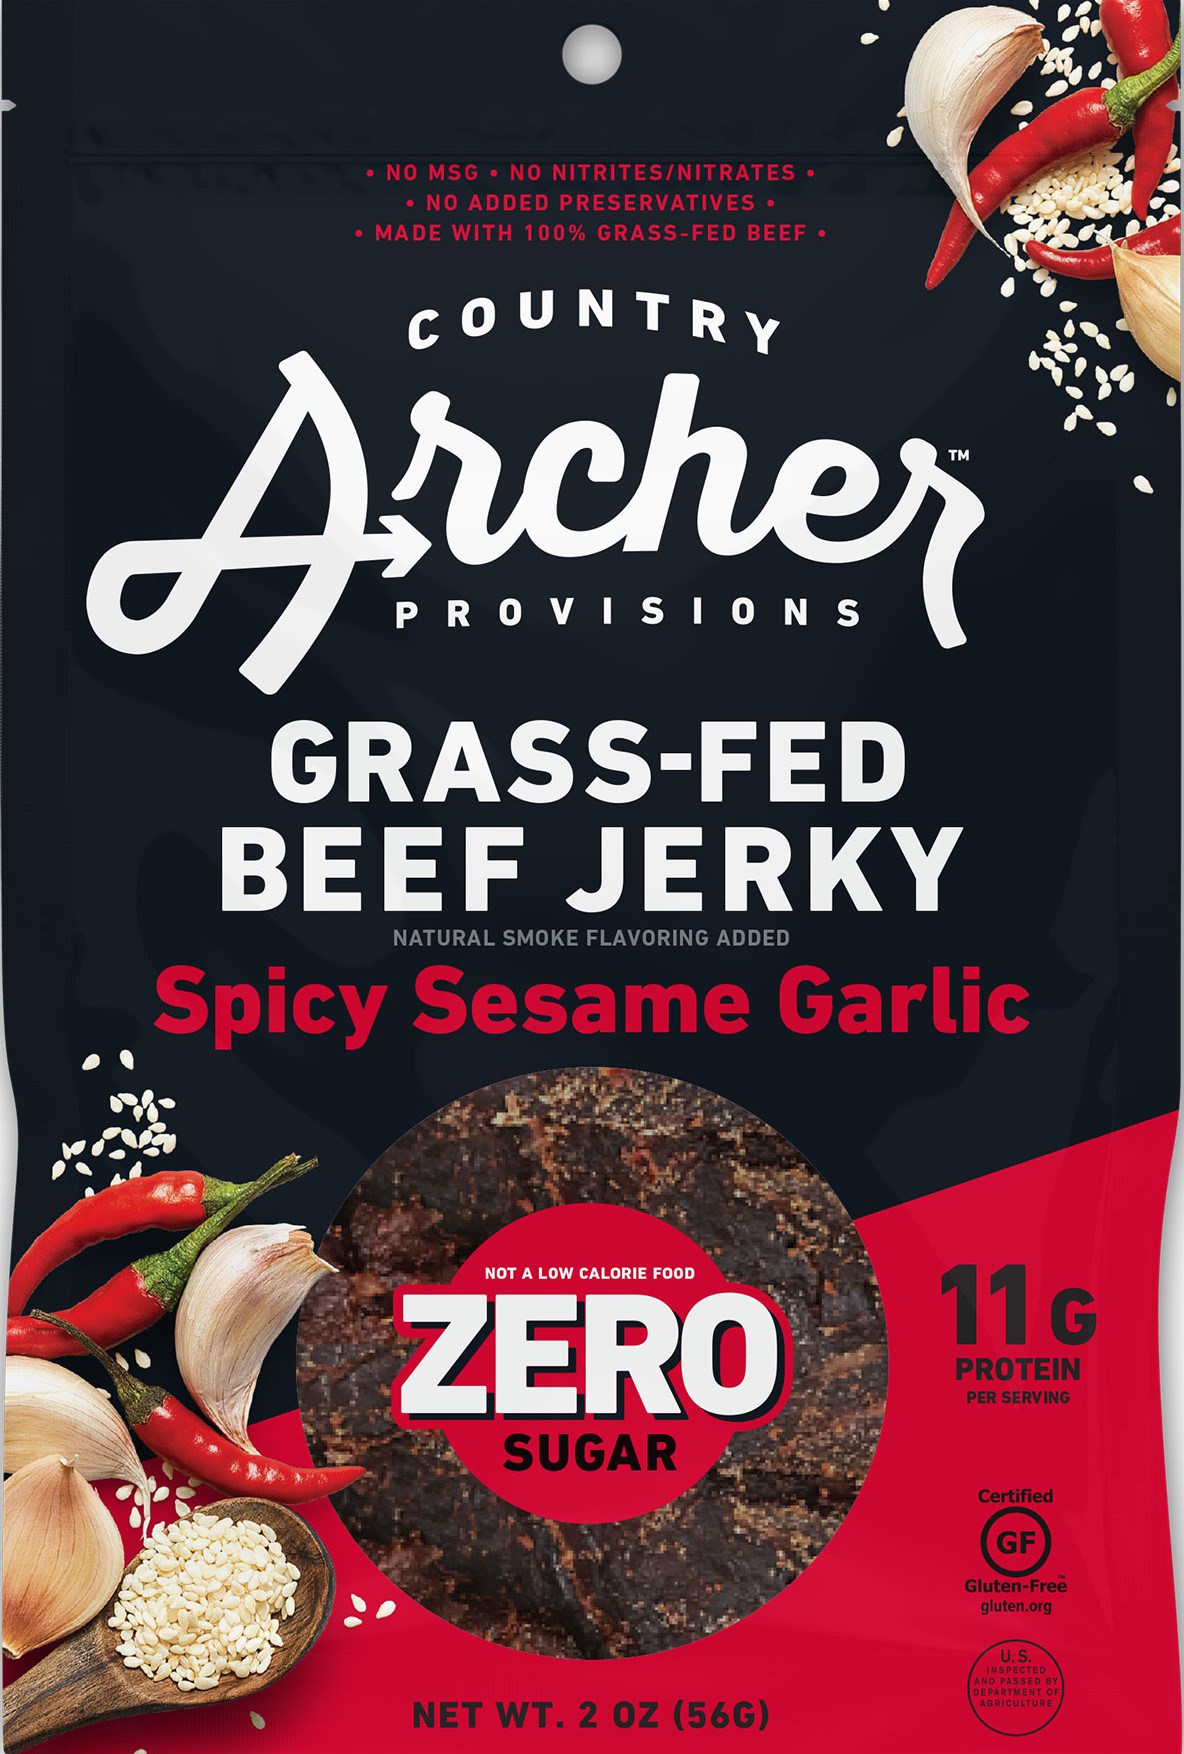 Вяленая говядина травяного откорма с нулевым сахаром - 2 унций Country Archer Jerky Co. цена и фото